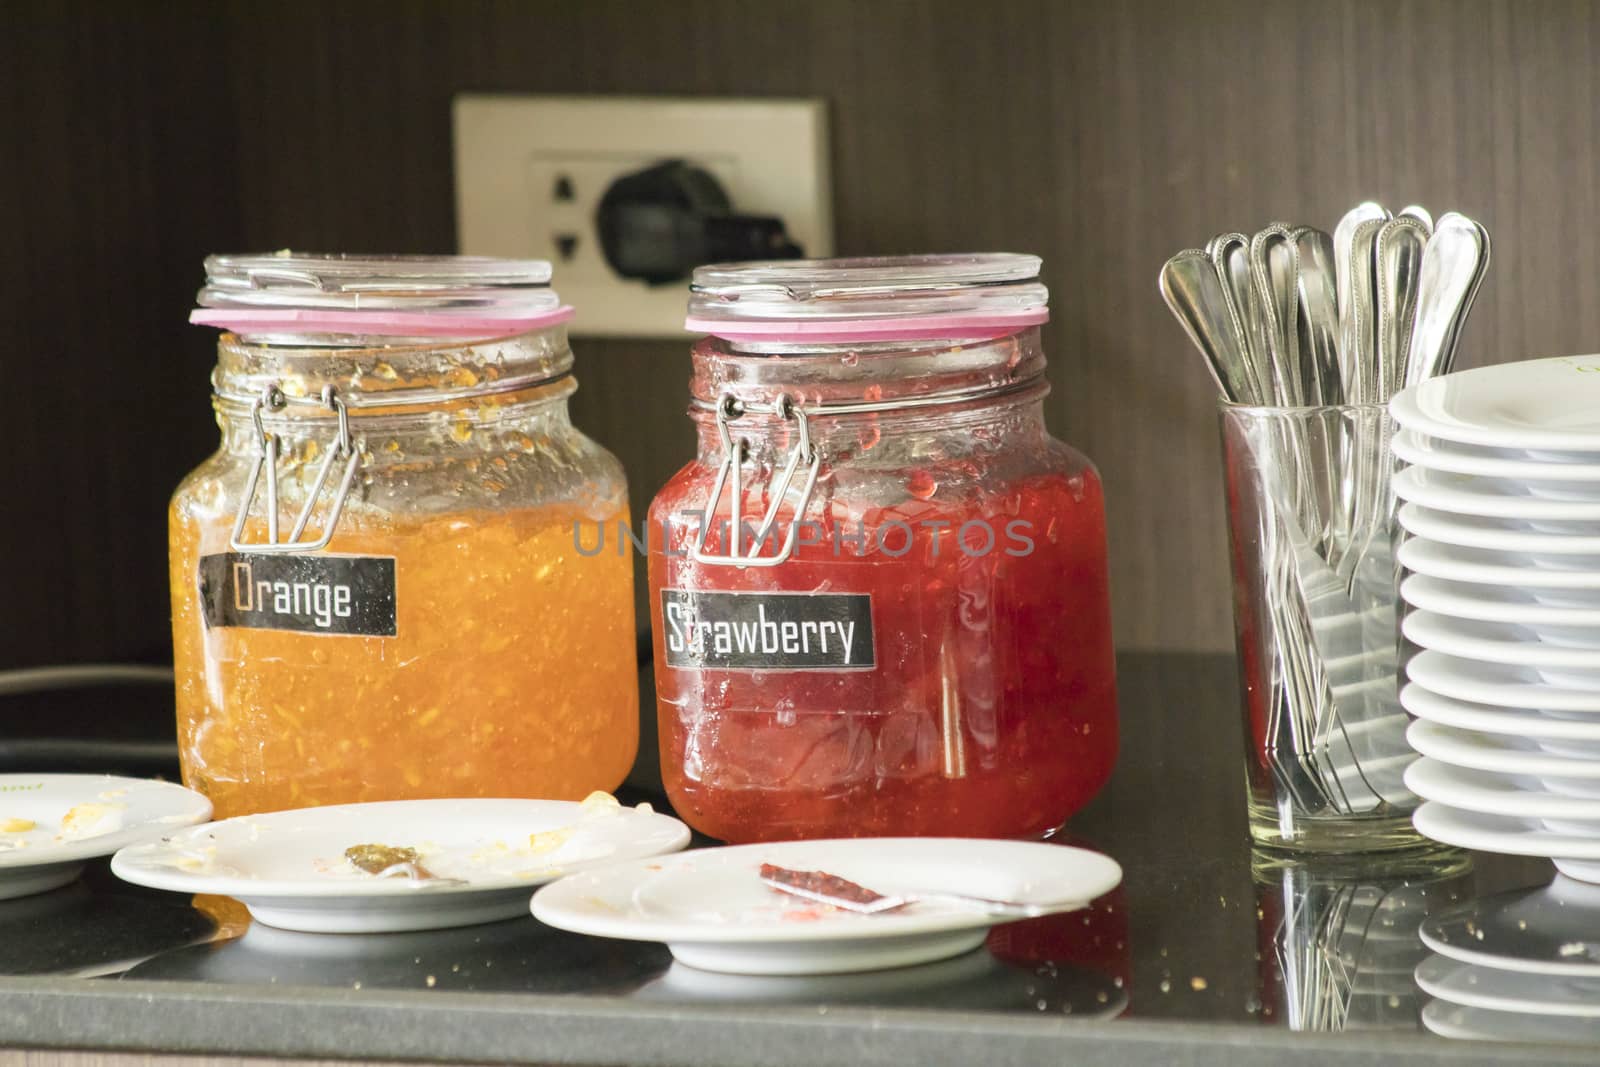 Orange,strawberry jam in glass jars on table in morning breakfast